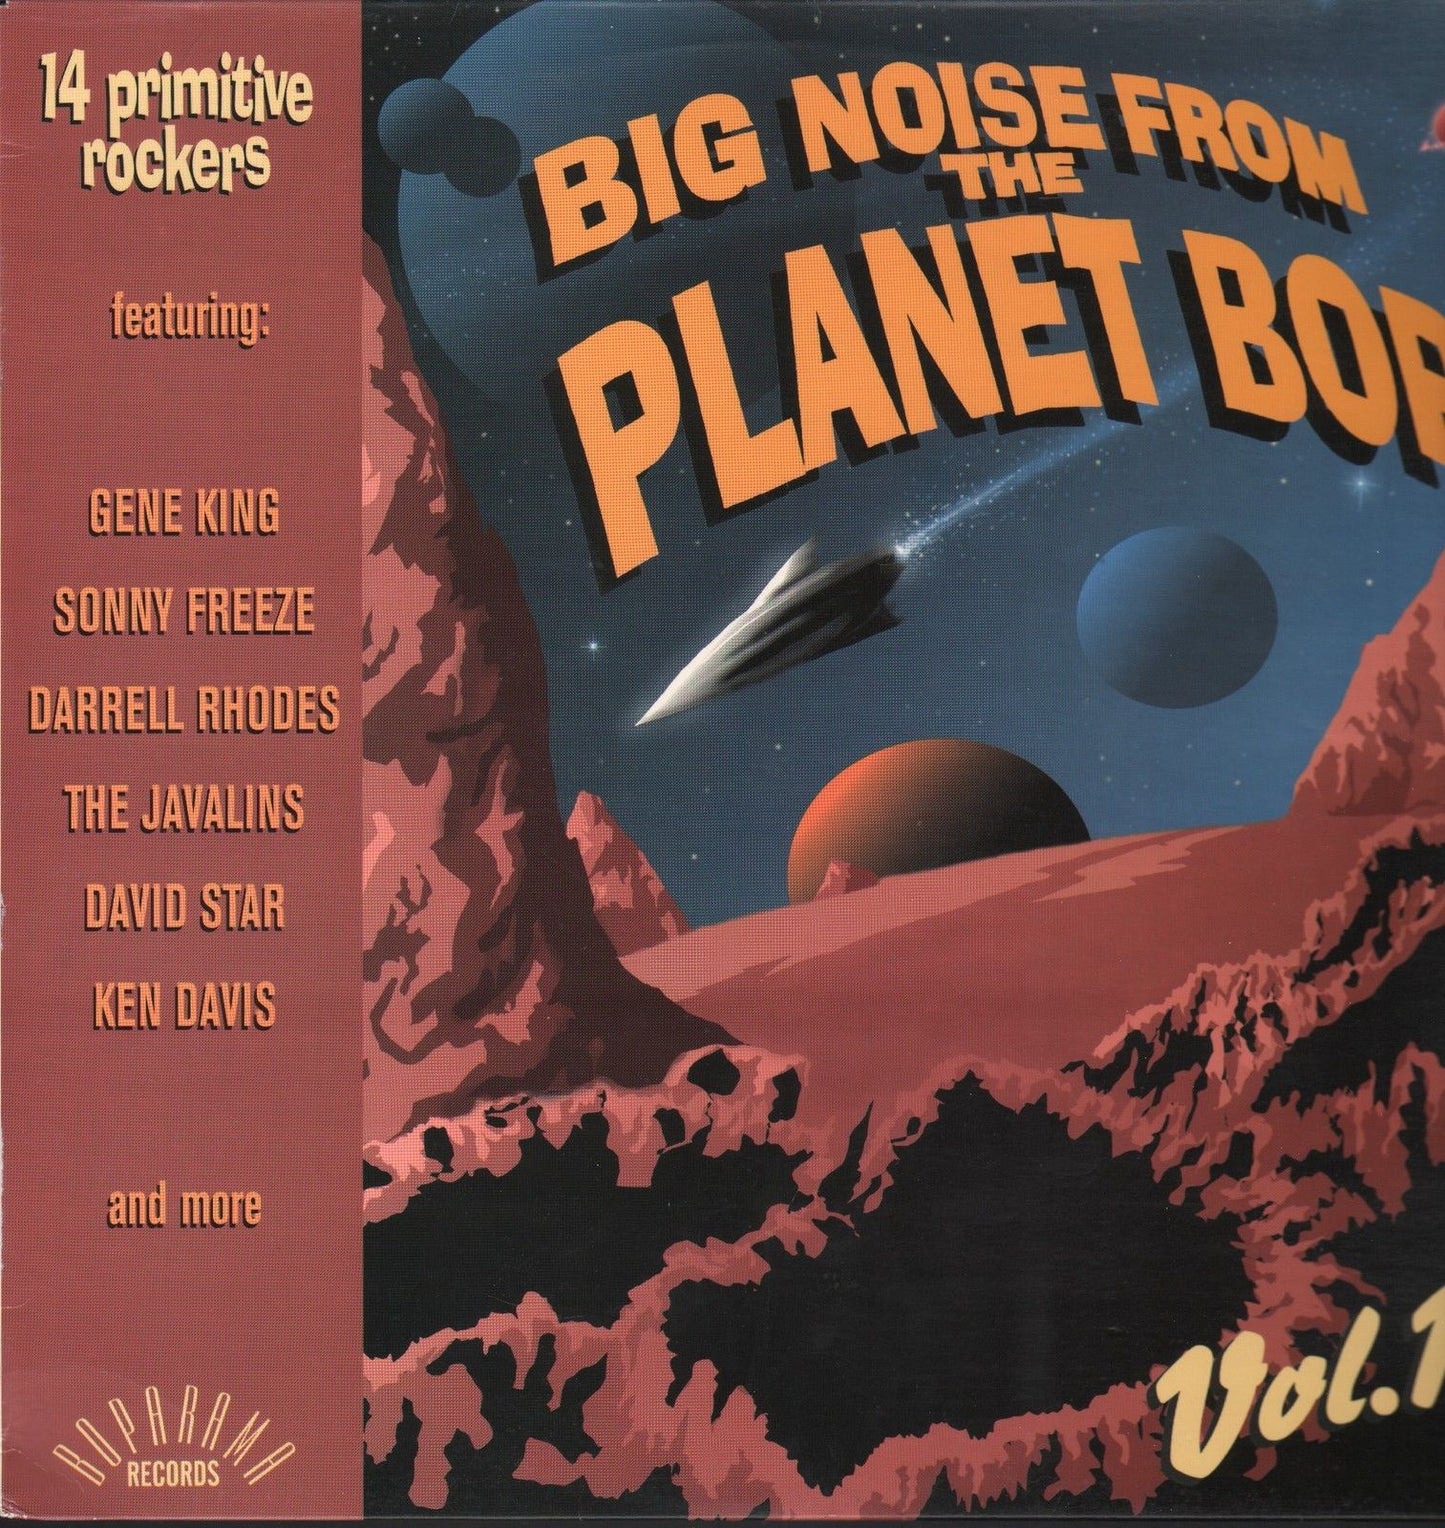 LP - VA - Big Noise From The Planet Bop Vol. 1